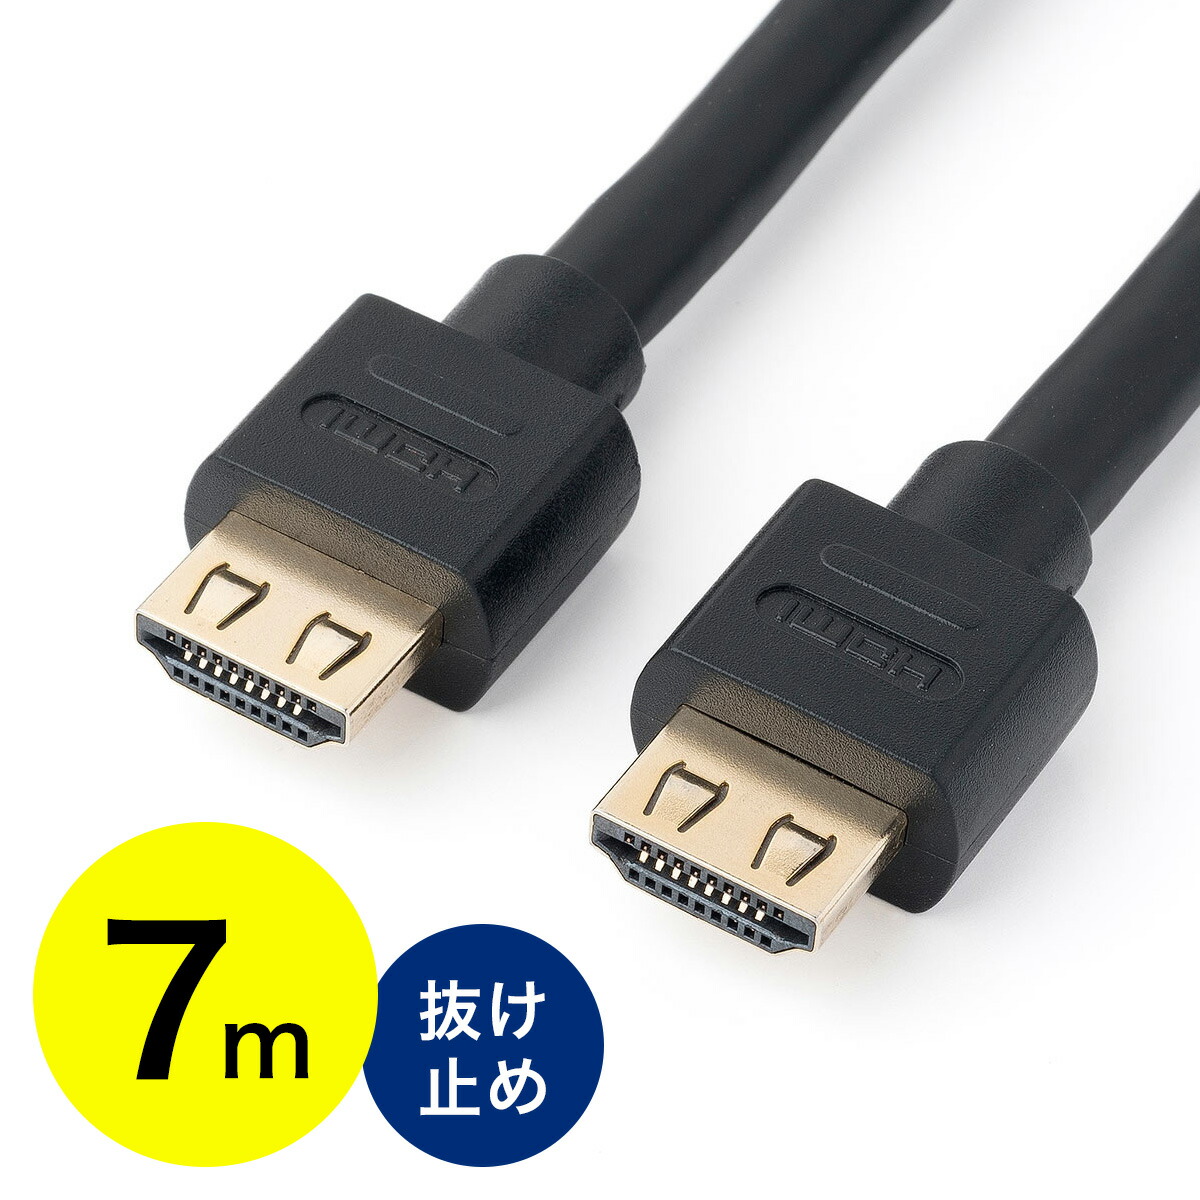 500-HDMI012-7 サンワダイレクト限定品 抜けにくいHDMIケーブル 7m フルHD ●日本正規品● 3D対応 映像+音声用 日時指定 ラッチ内蔵 HEC対応 ブラック